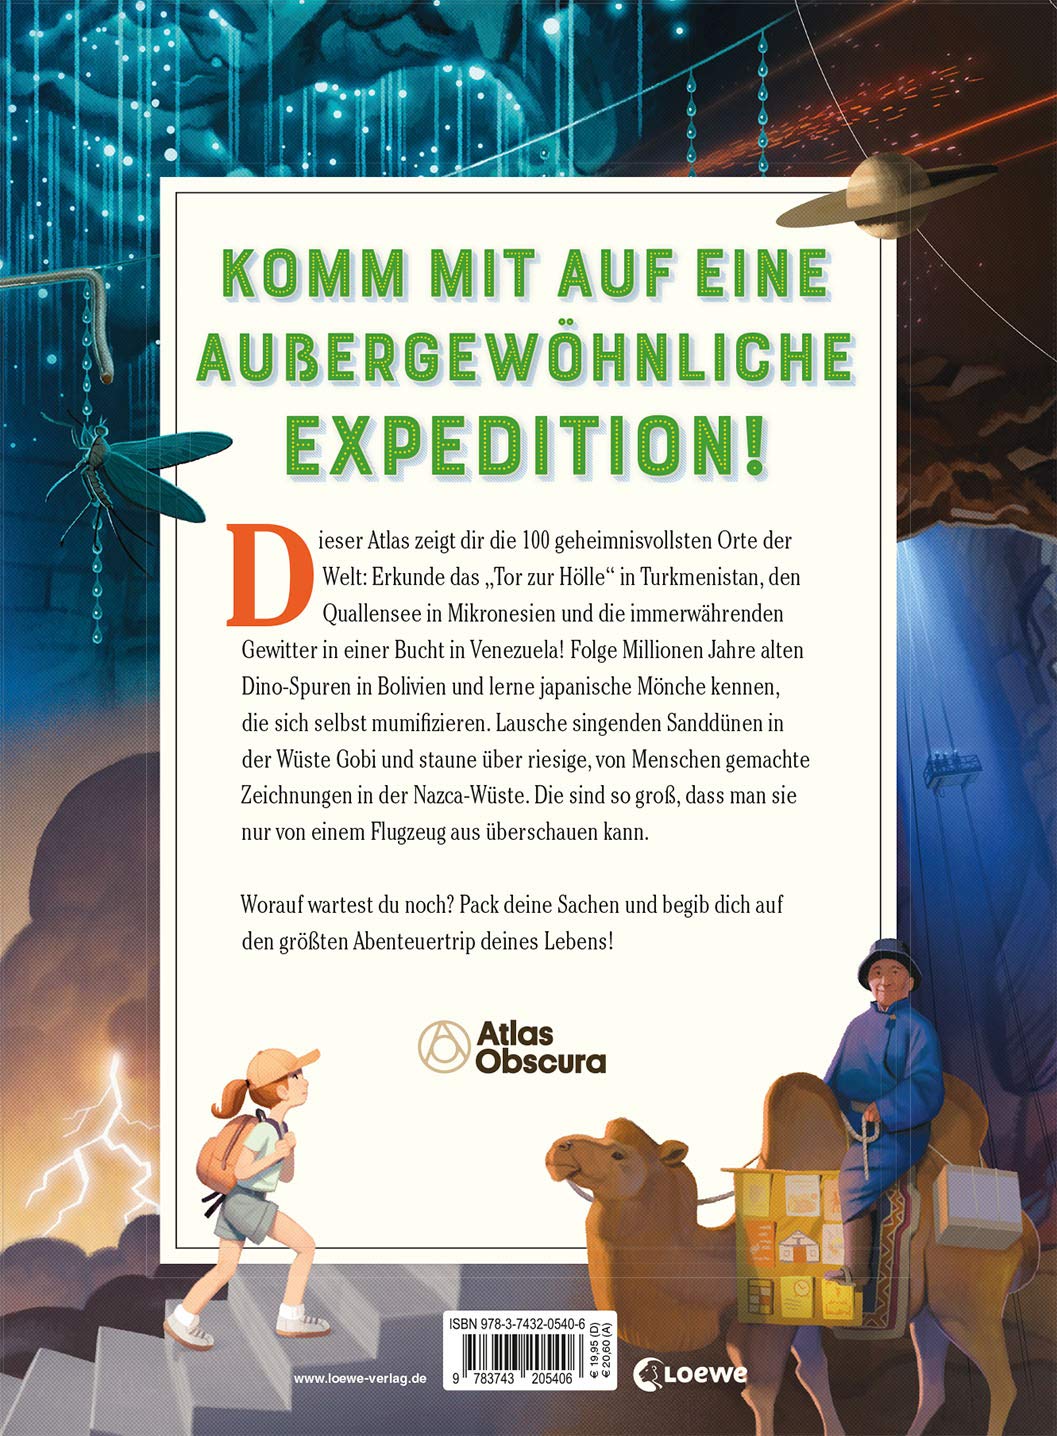 Atlas Obscura Kids Edition | Dylan Thuras